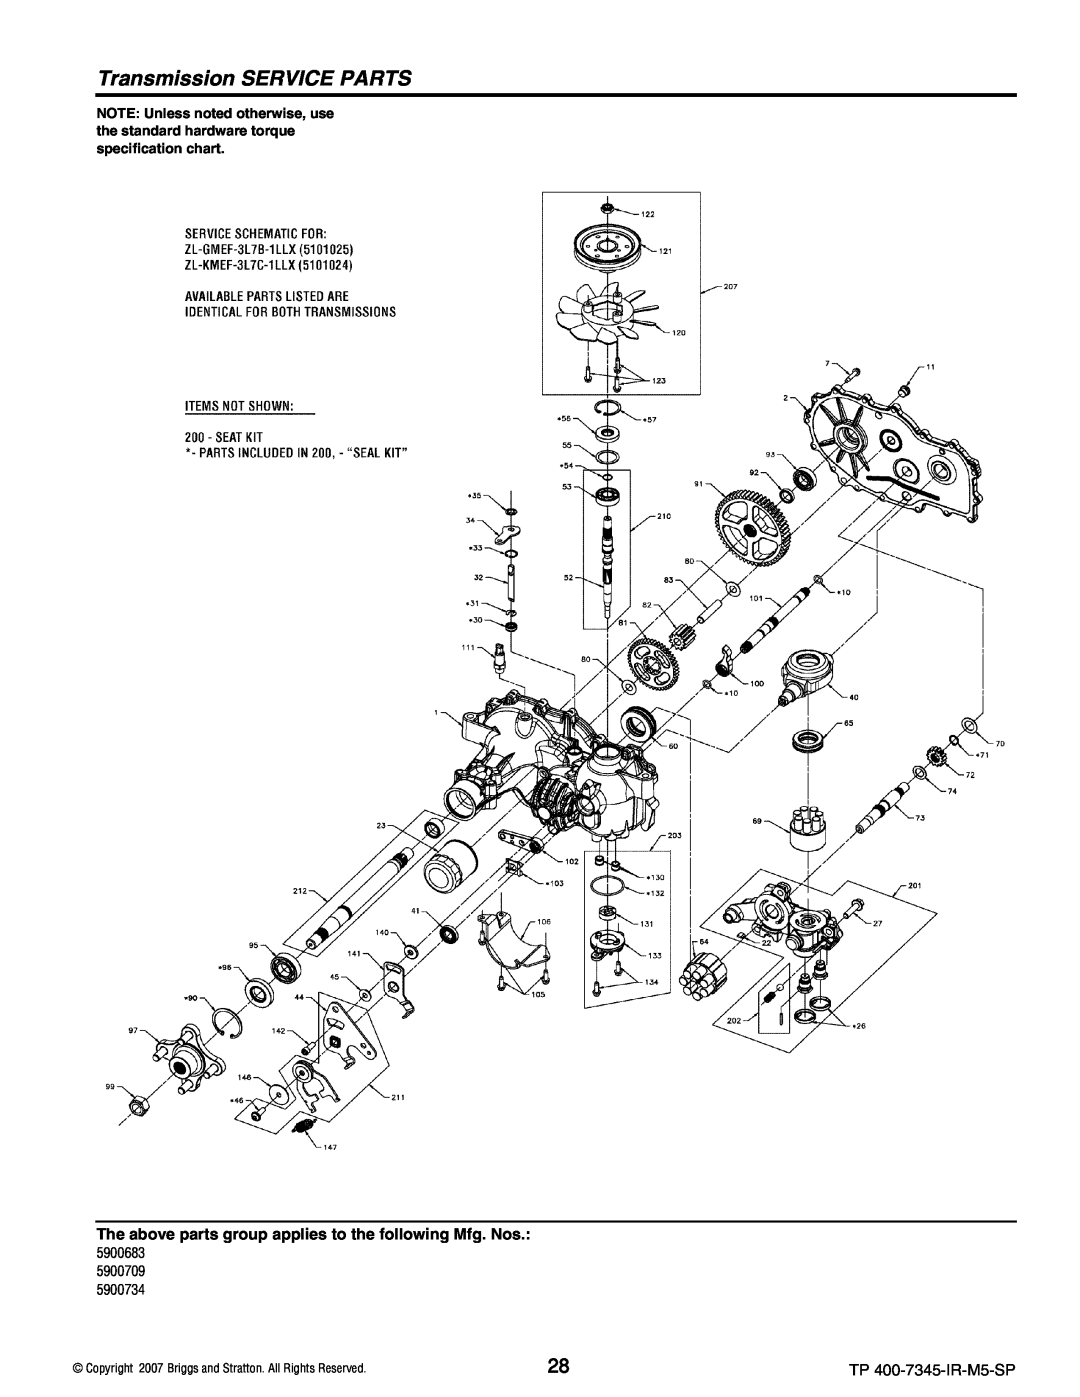 Briggs & Stratton 5900734 manual Transmission SERVICE PARTS, 5900683 5900709, TP 400-7345-IR-M5-SP 